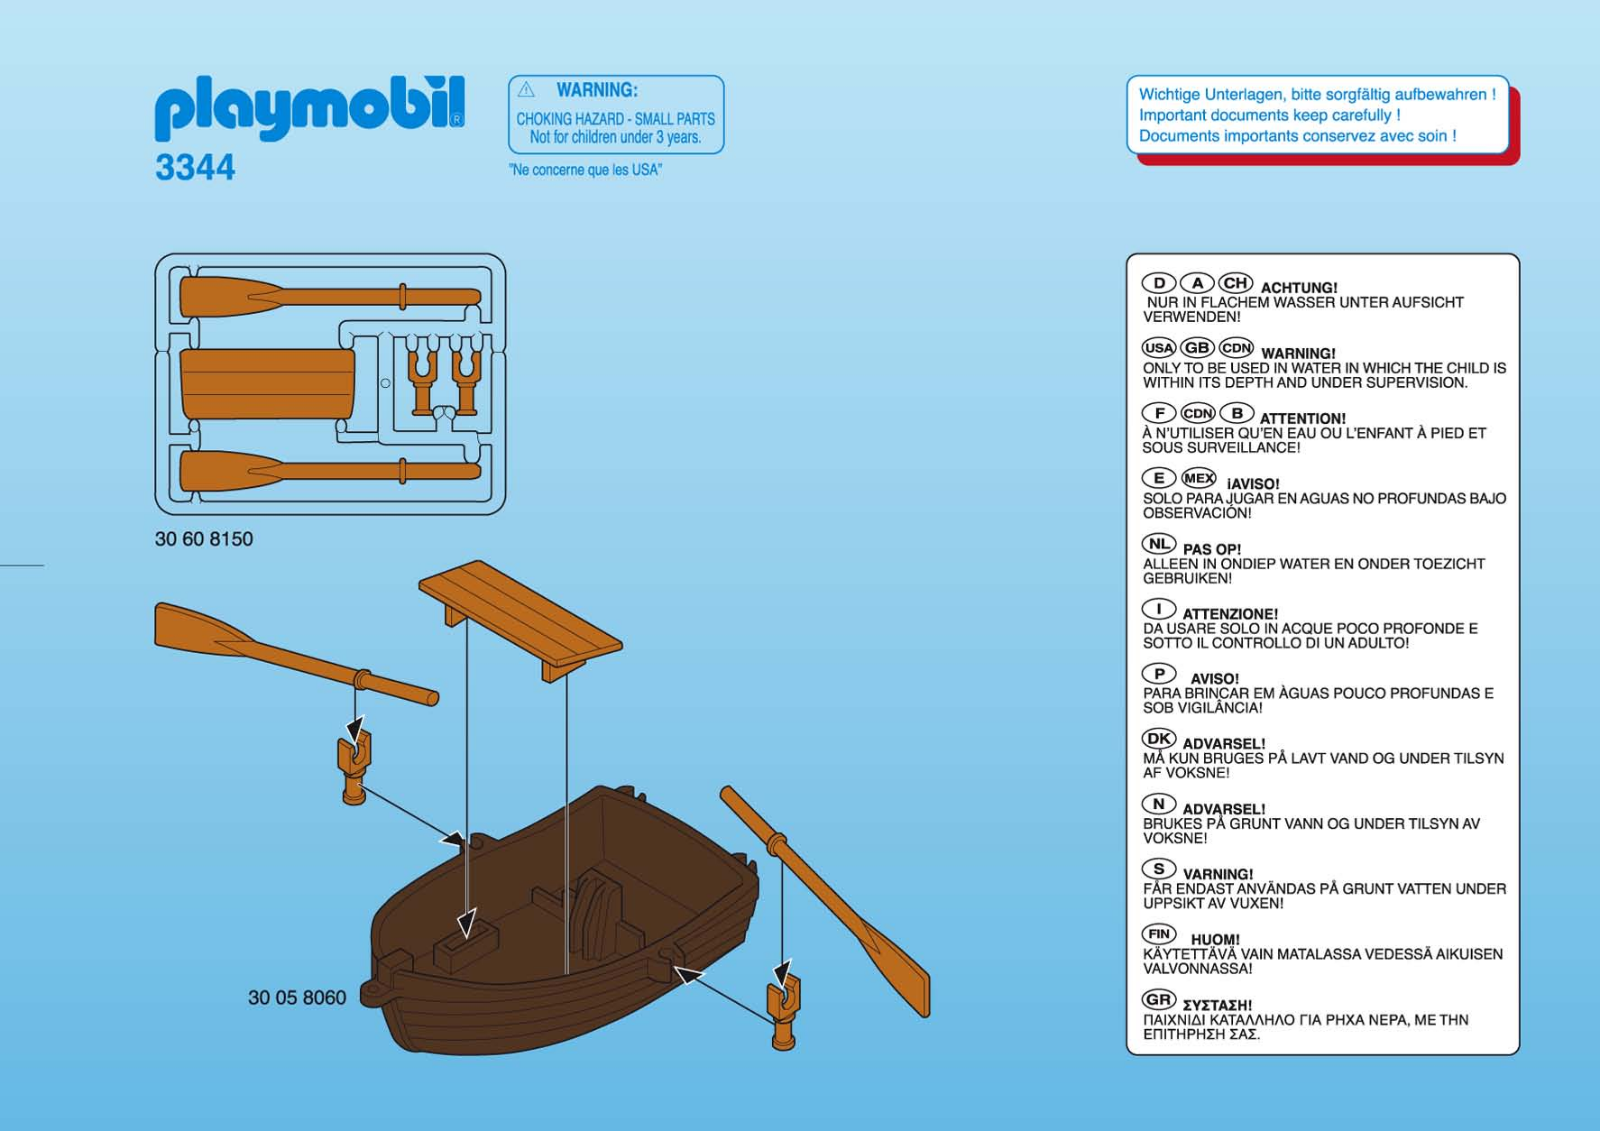 Playmobil 3344 Instructions